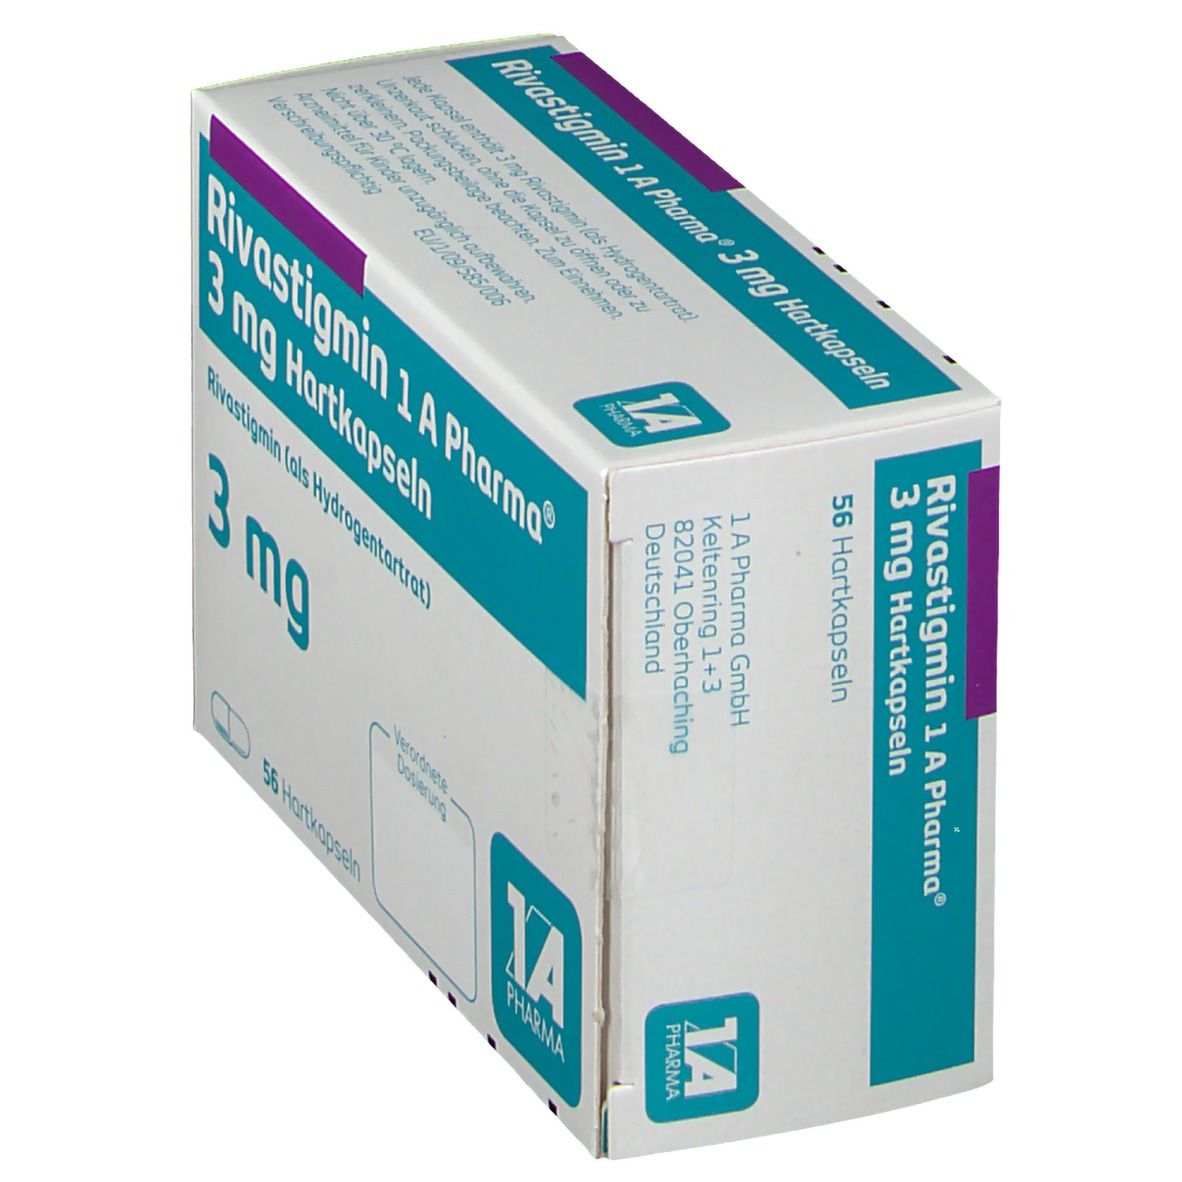 Rivastigmin 1 A Pharma® 3 mg